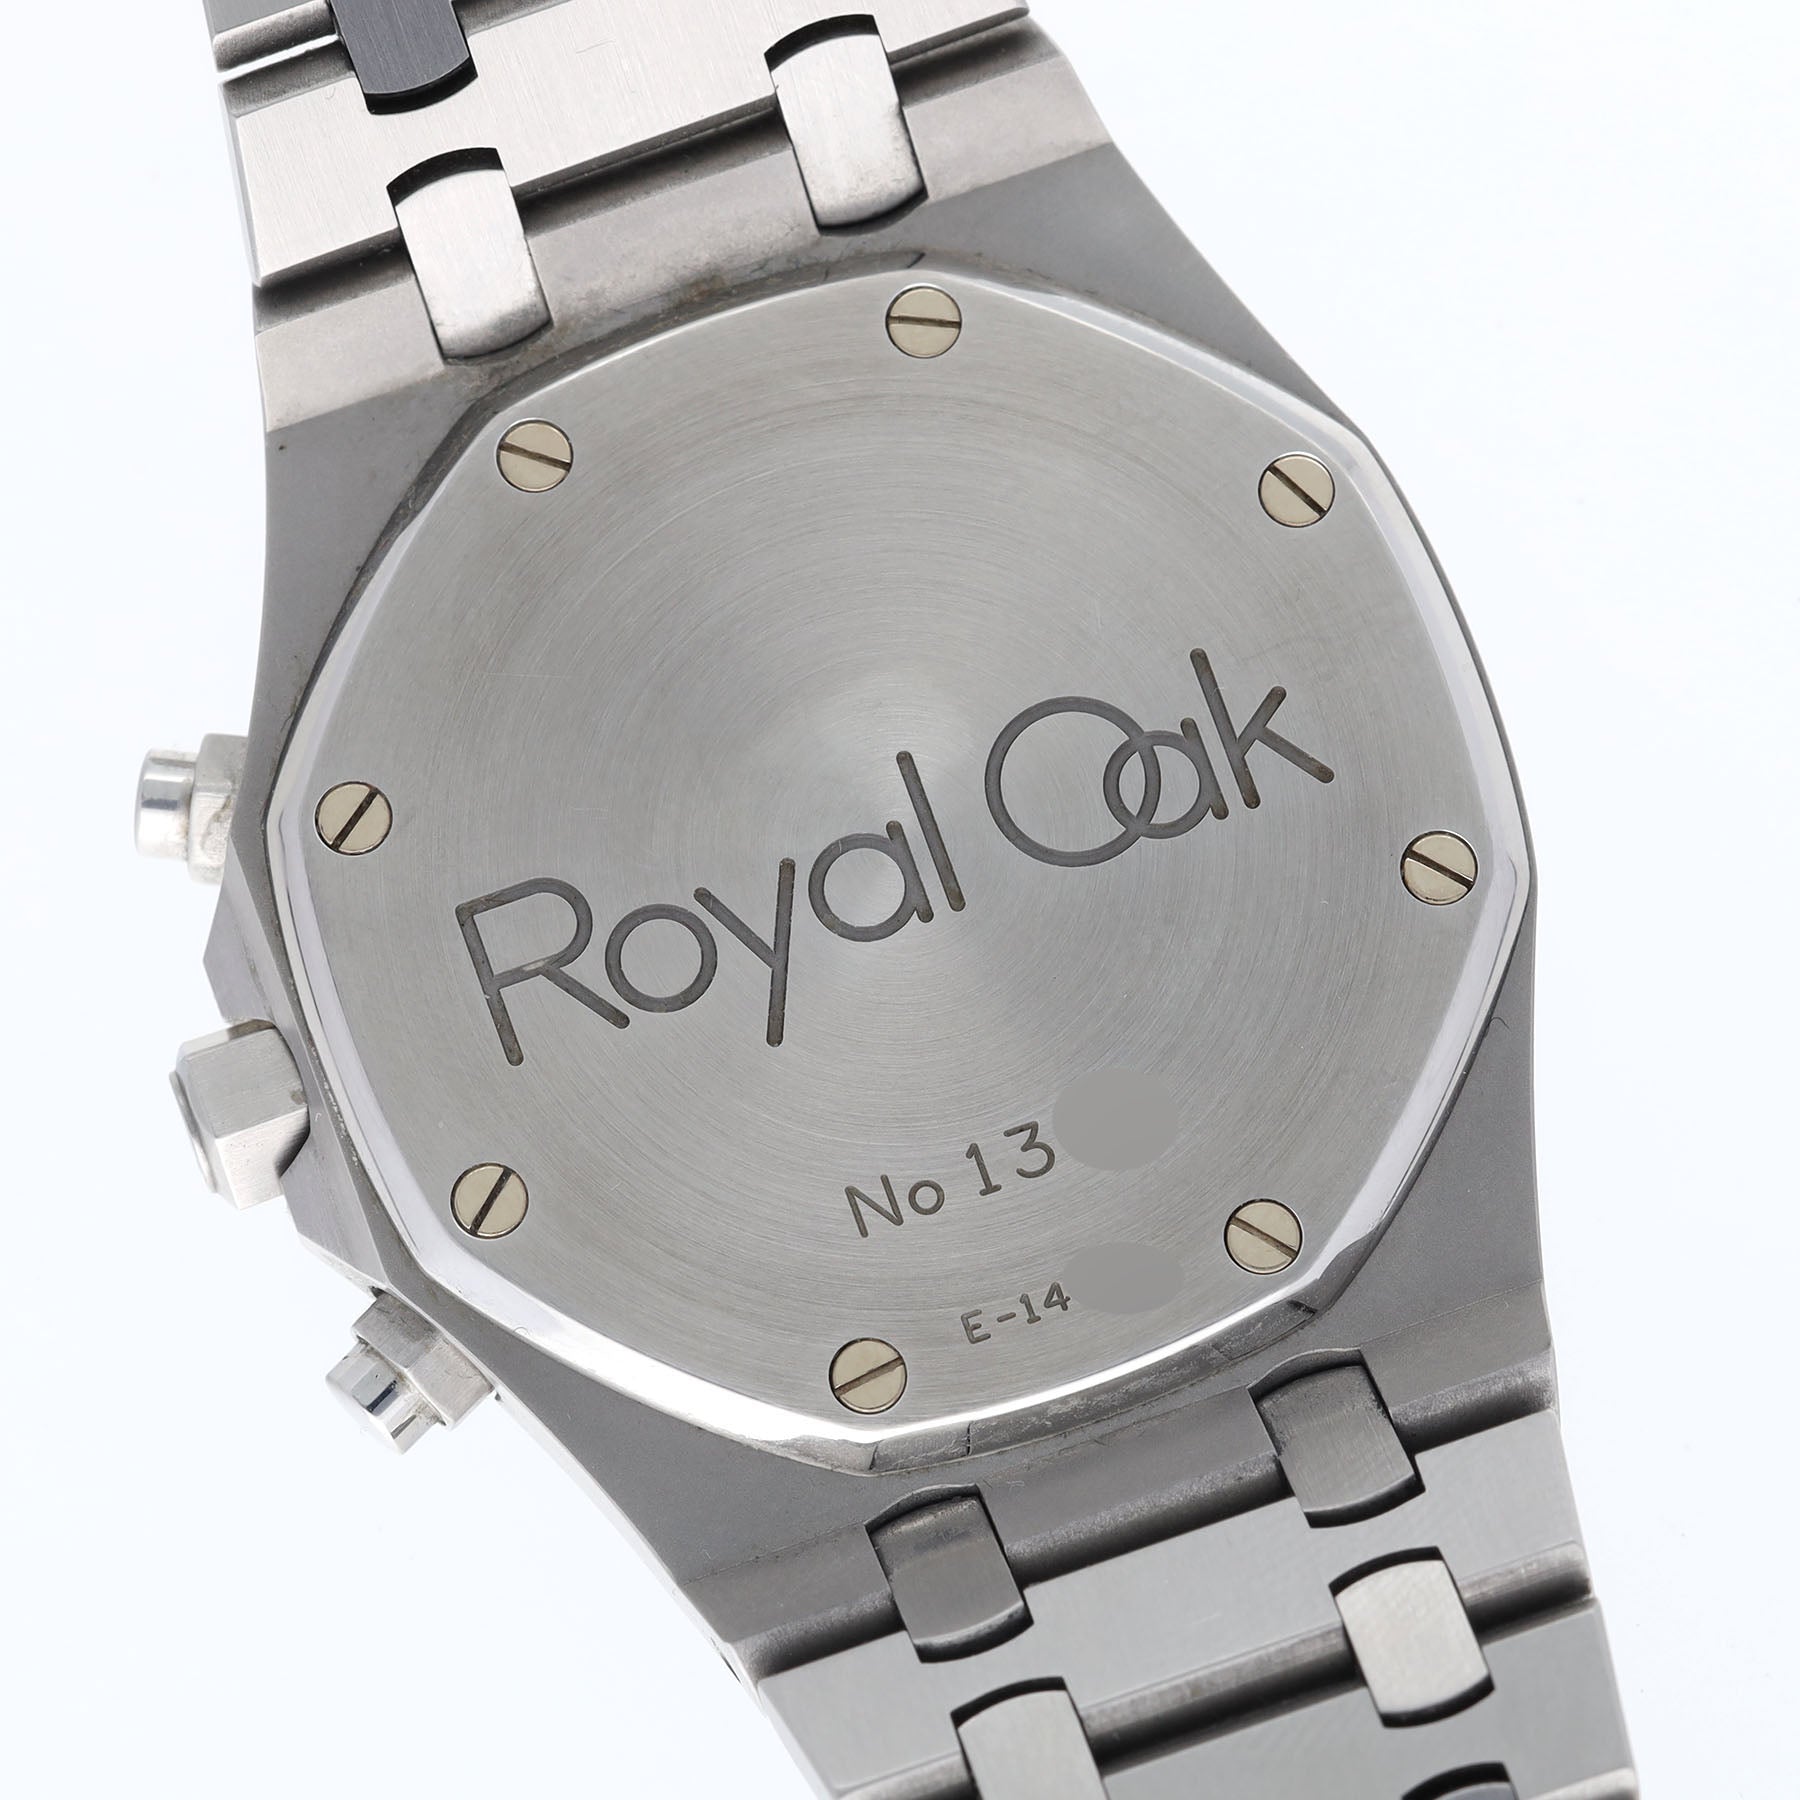 Audemars Piguet Royal oak chronograph "Kasparov"Blue dial